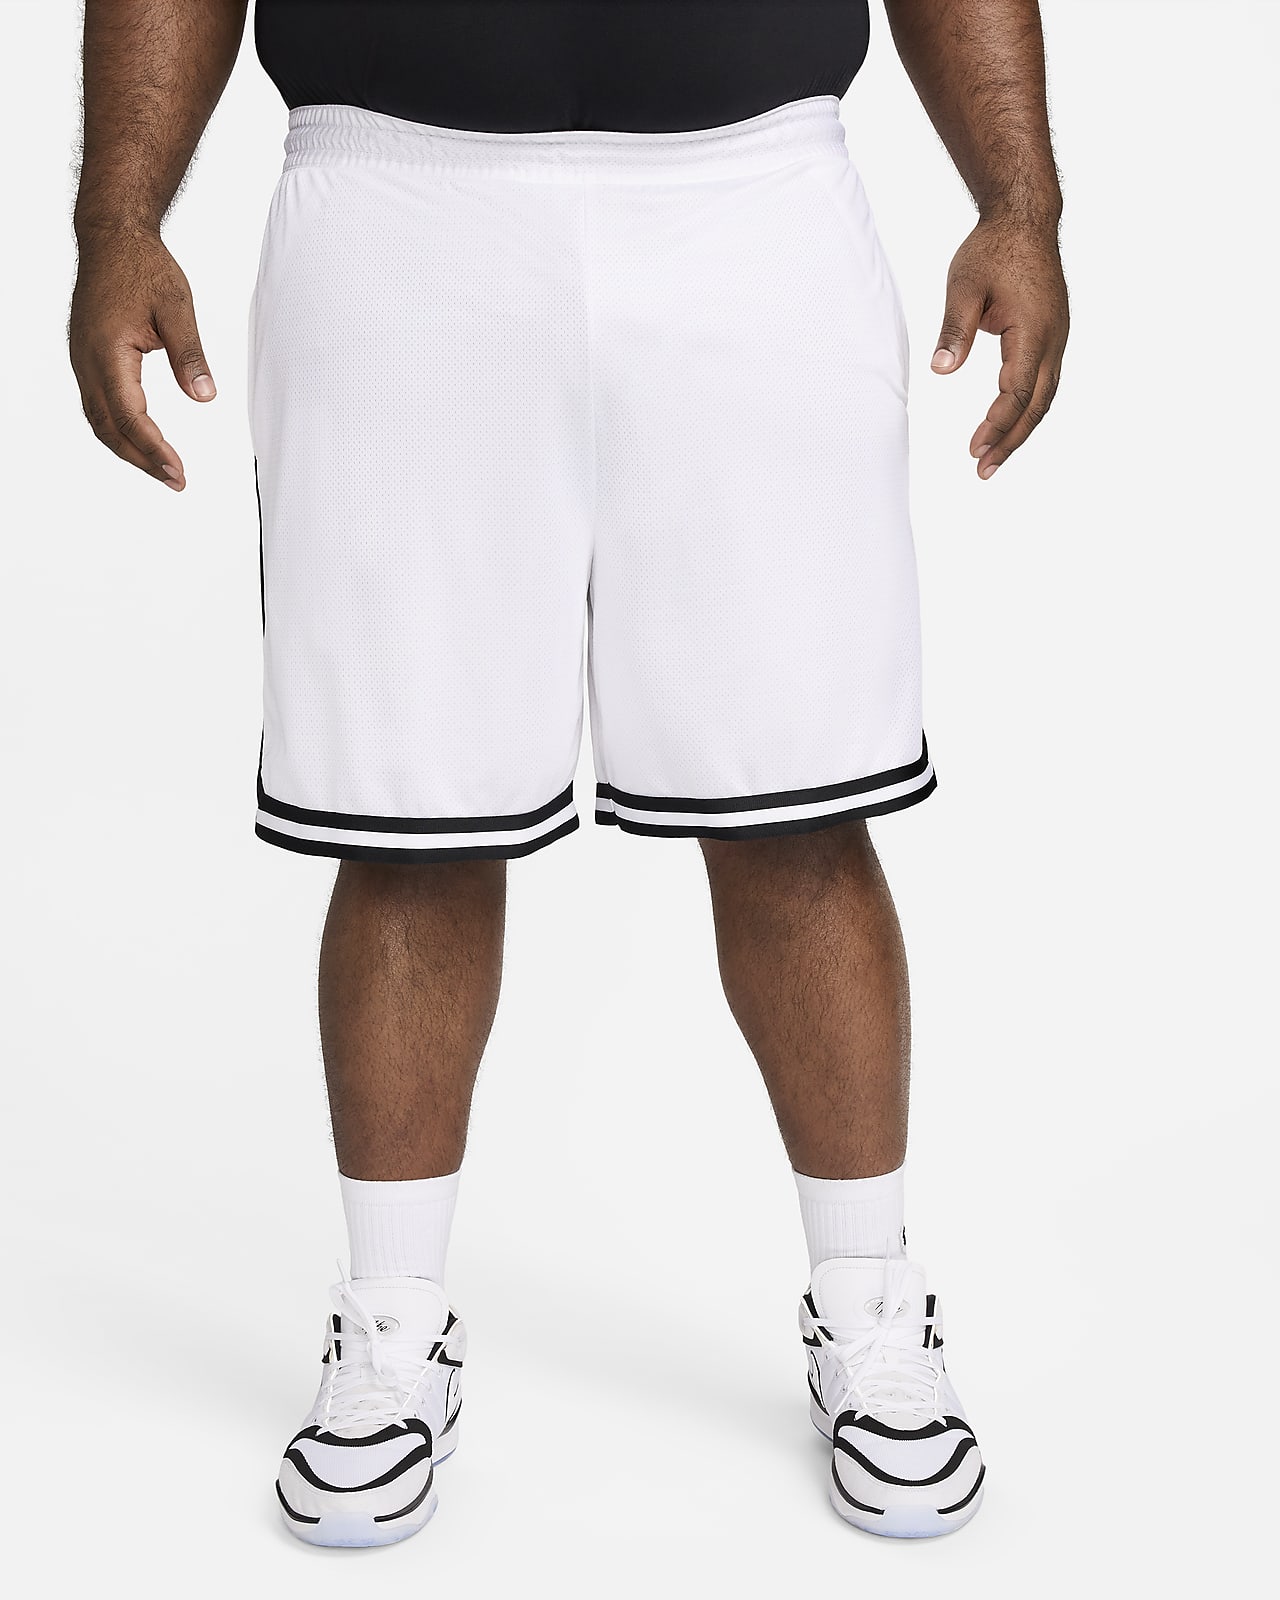 Men's Basketball Shorts. Nike NL